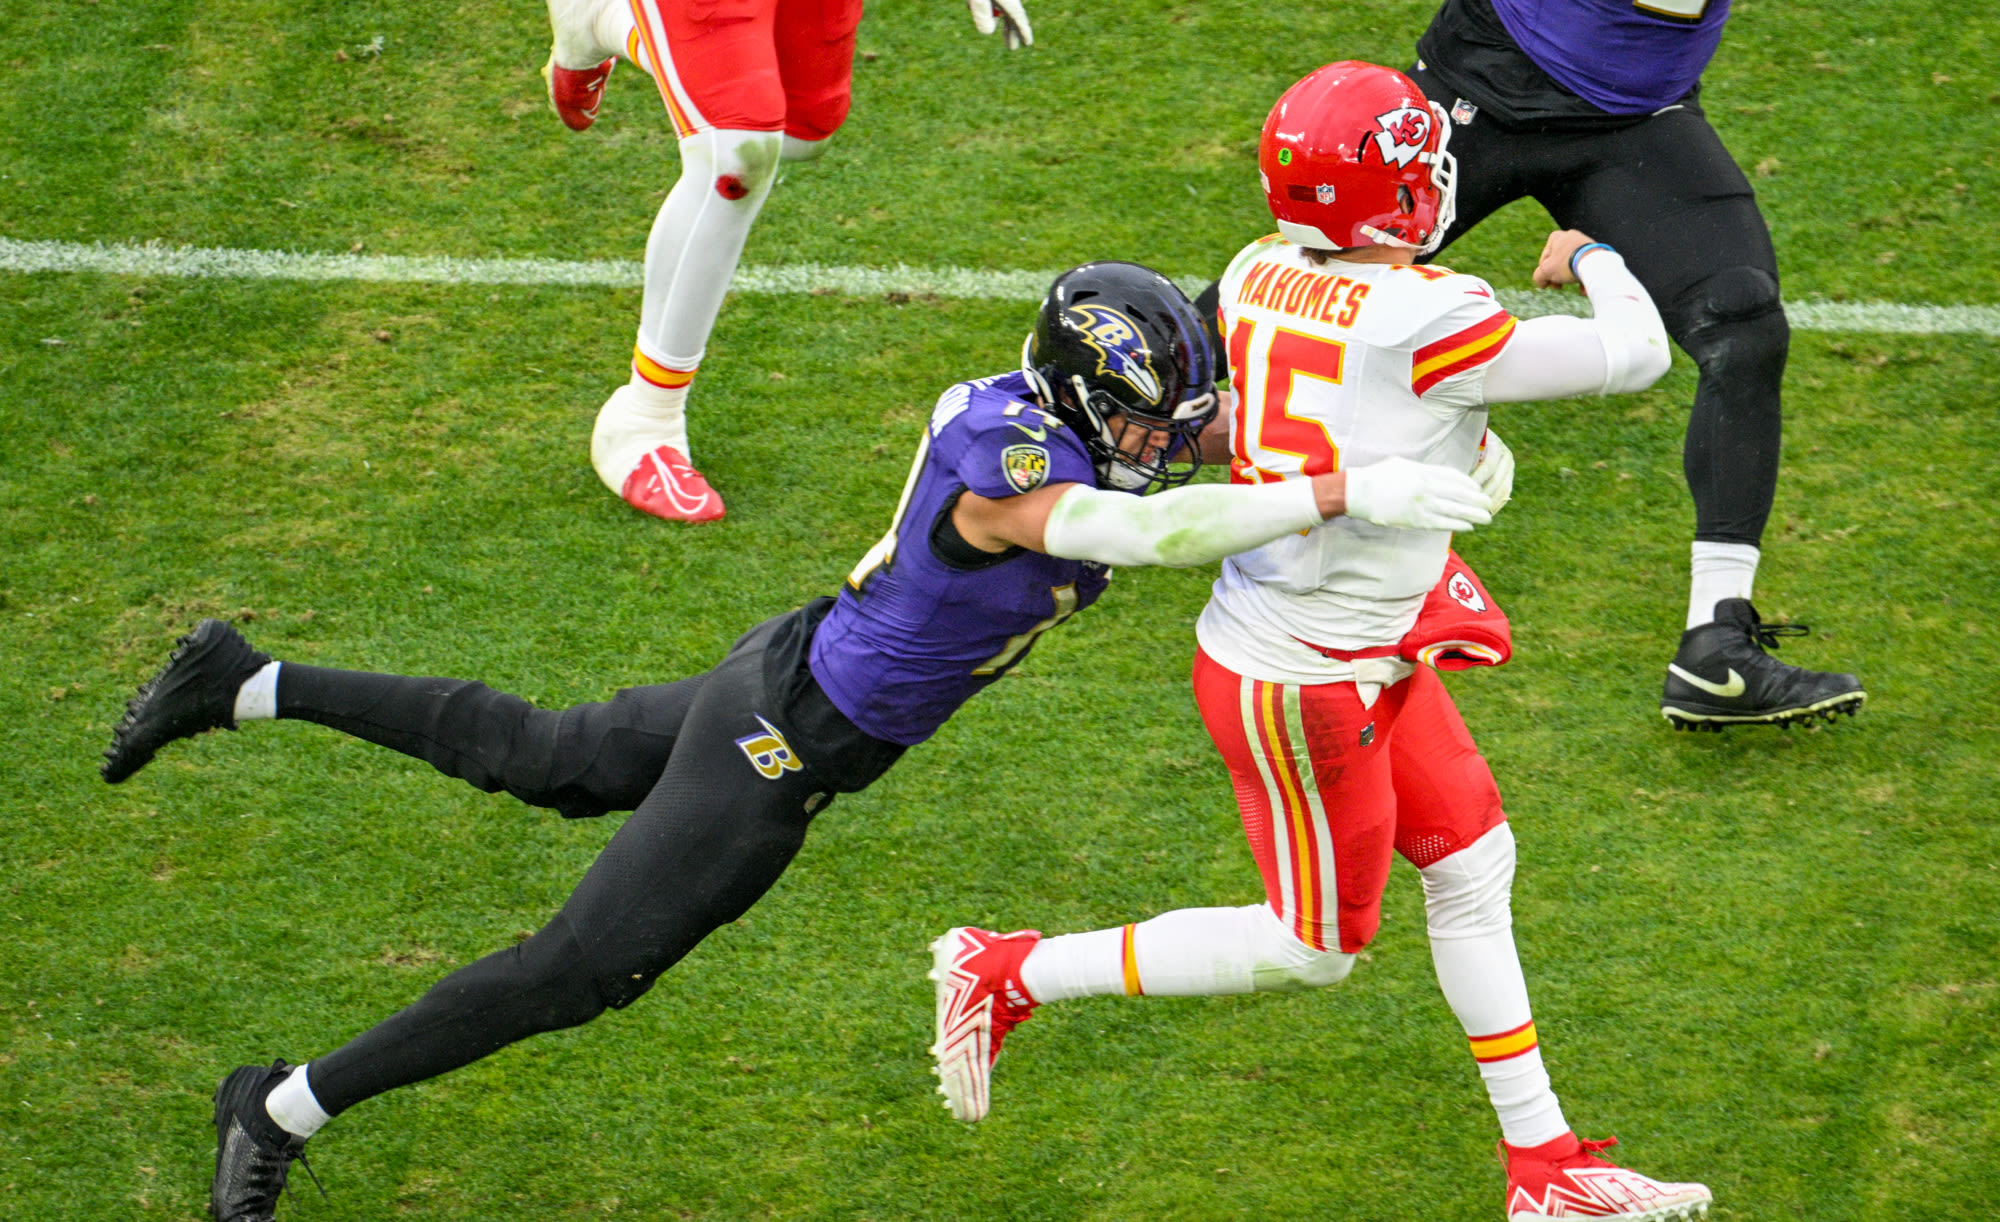 Ravens will face Super Bowl champion Chiefs in Kansas City to kick off NFL season